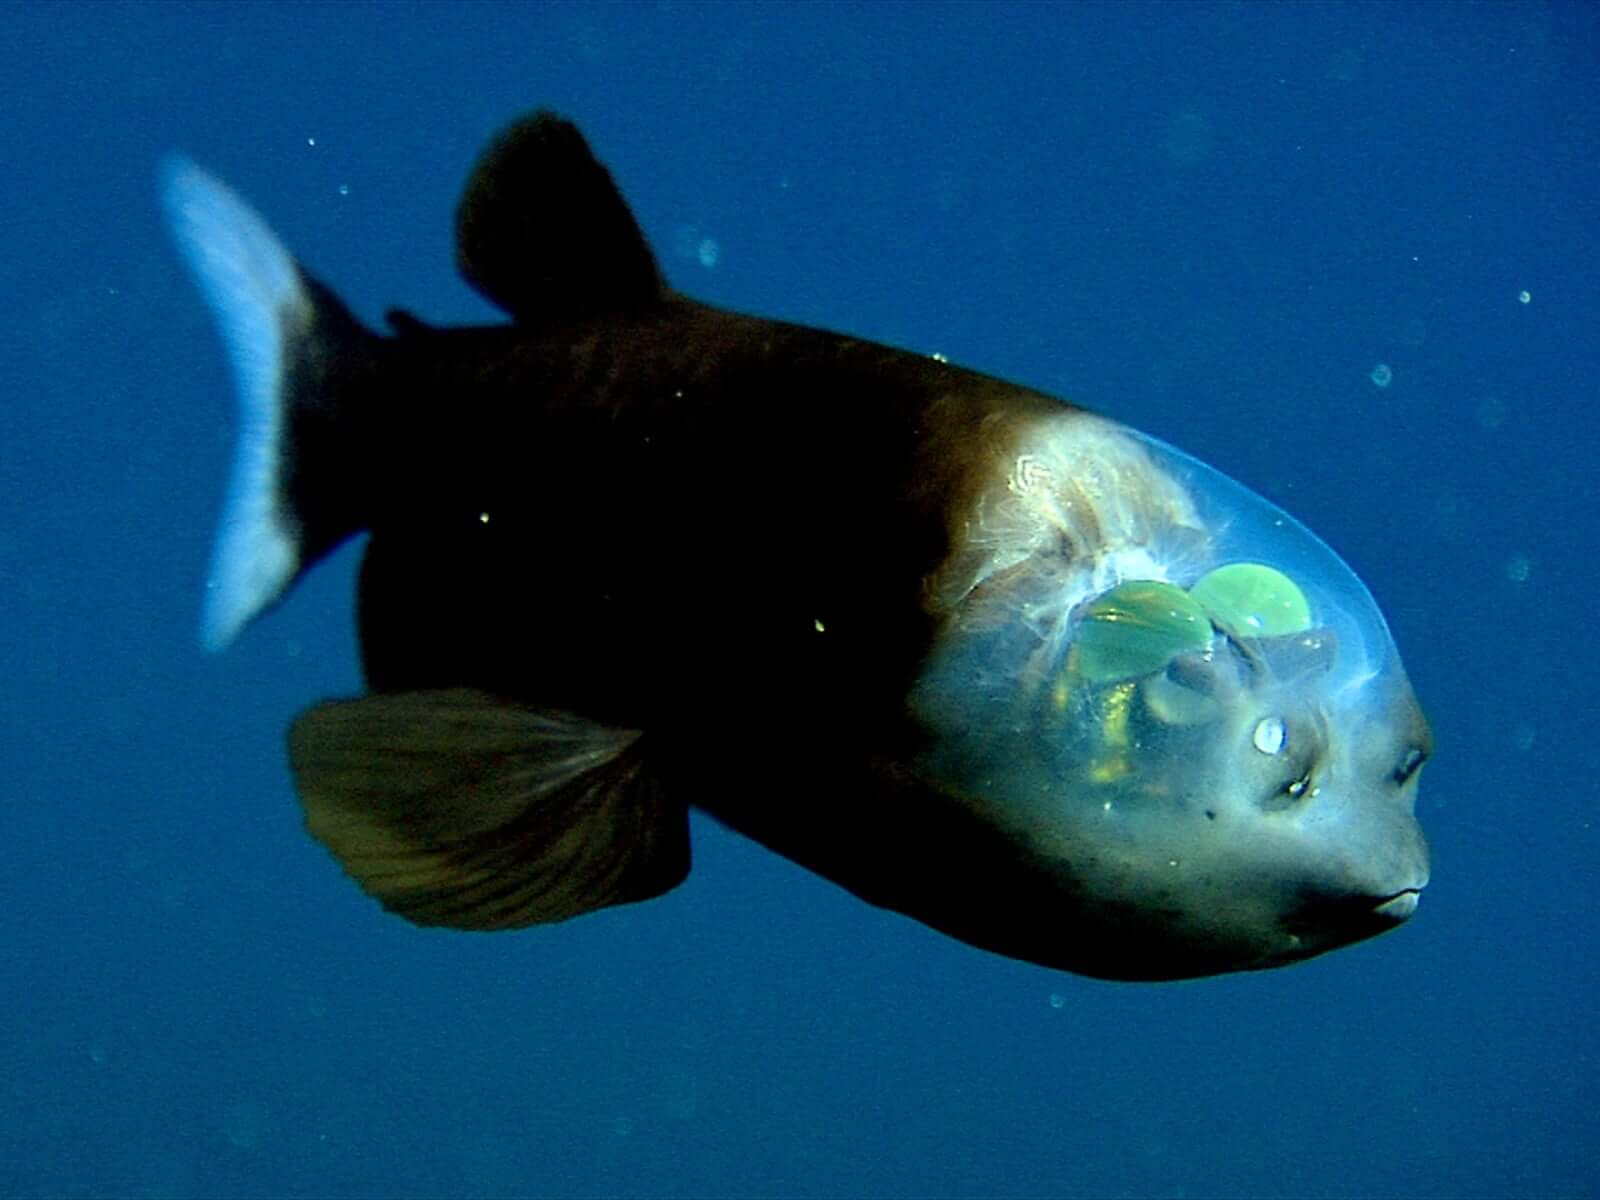 New deep-sea sighting - Barreleye fish with transparent head and tubular eyes